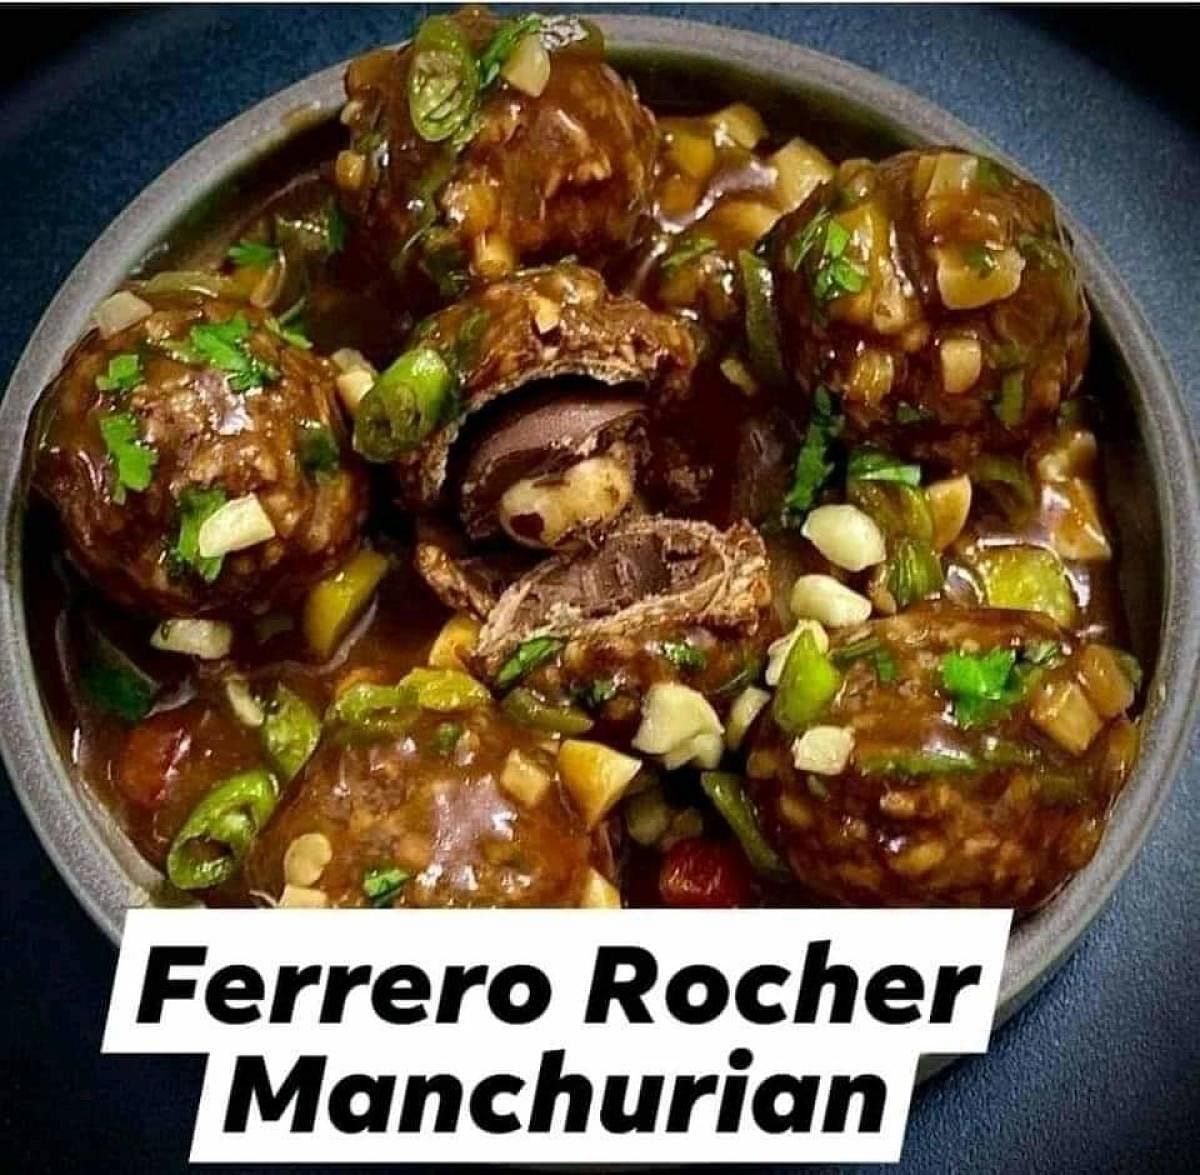 Ferrero Rocher manchurian